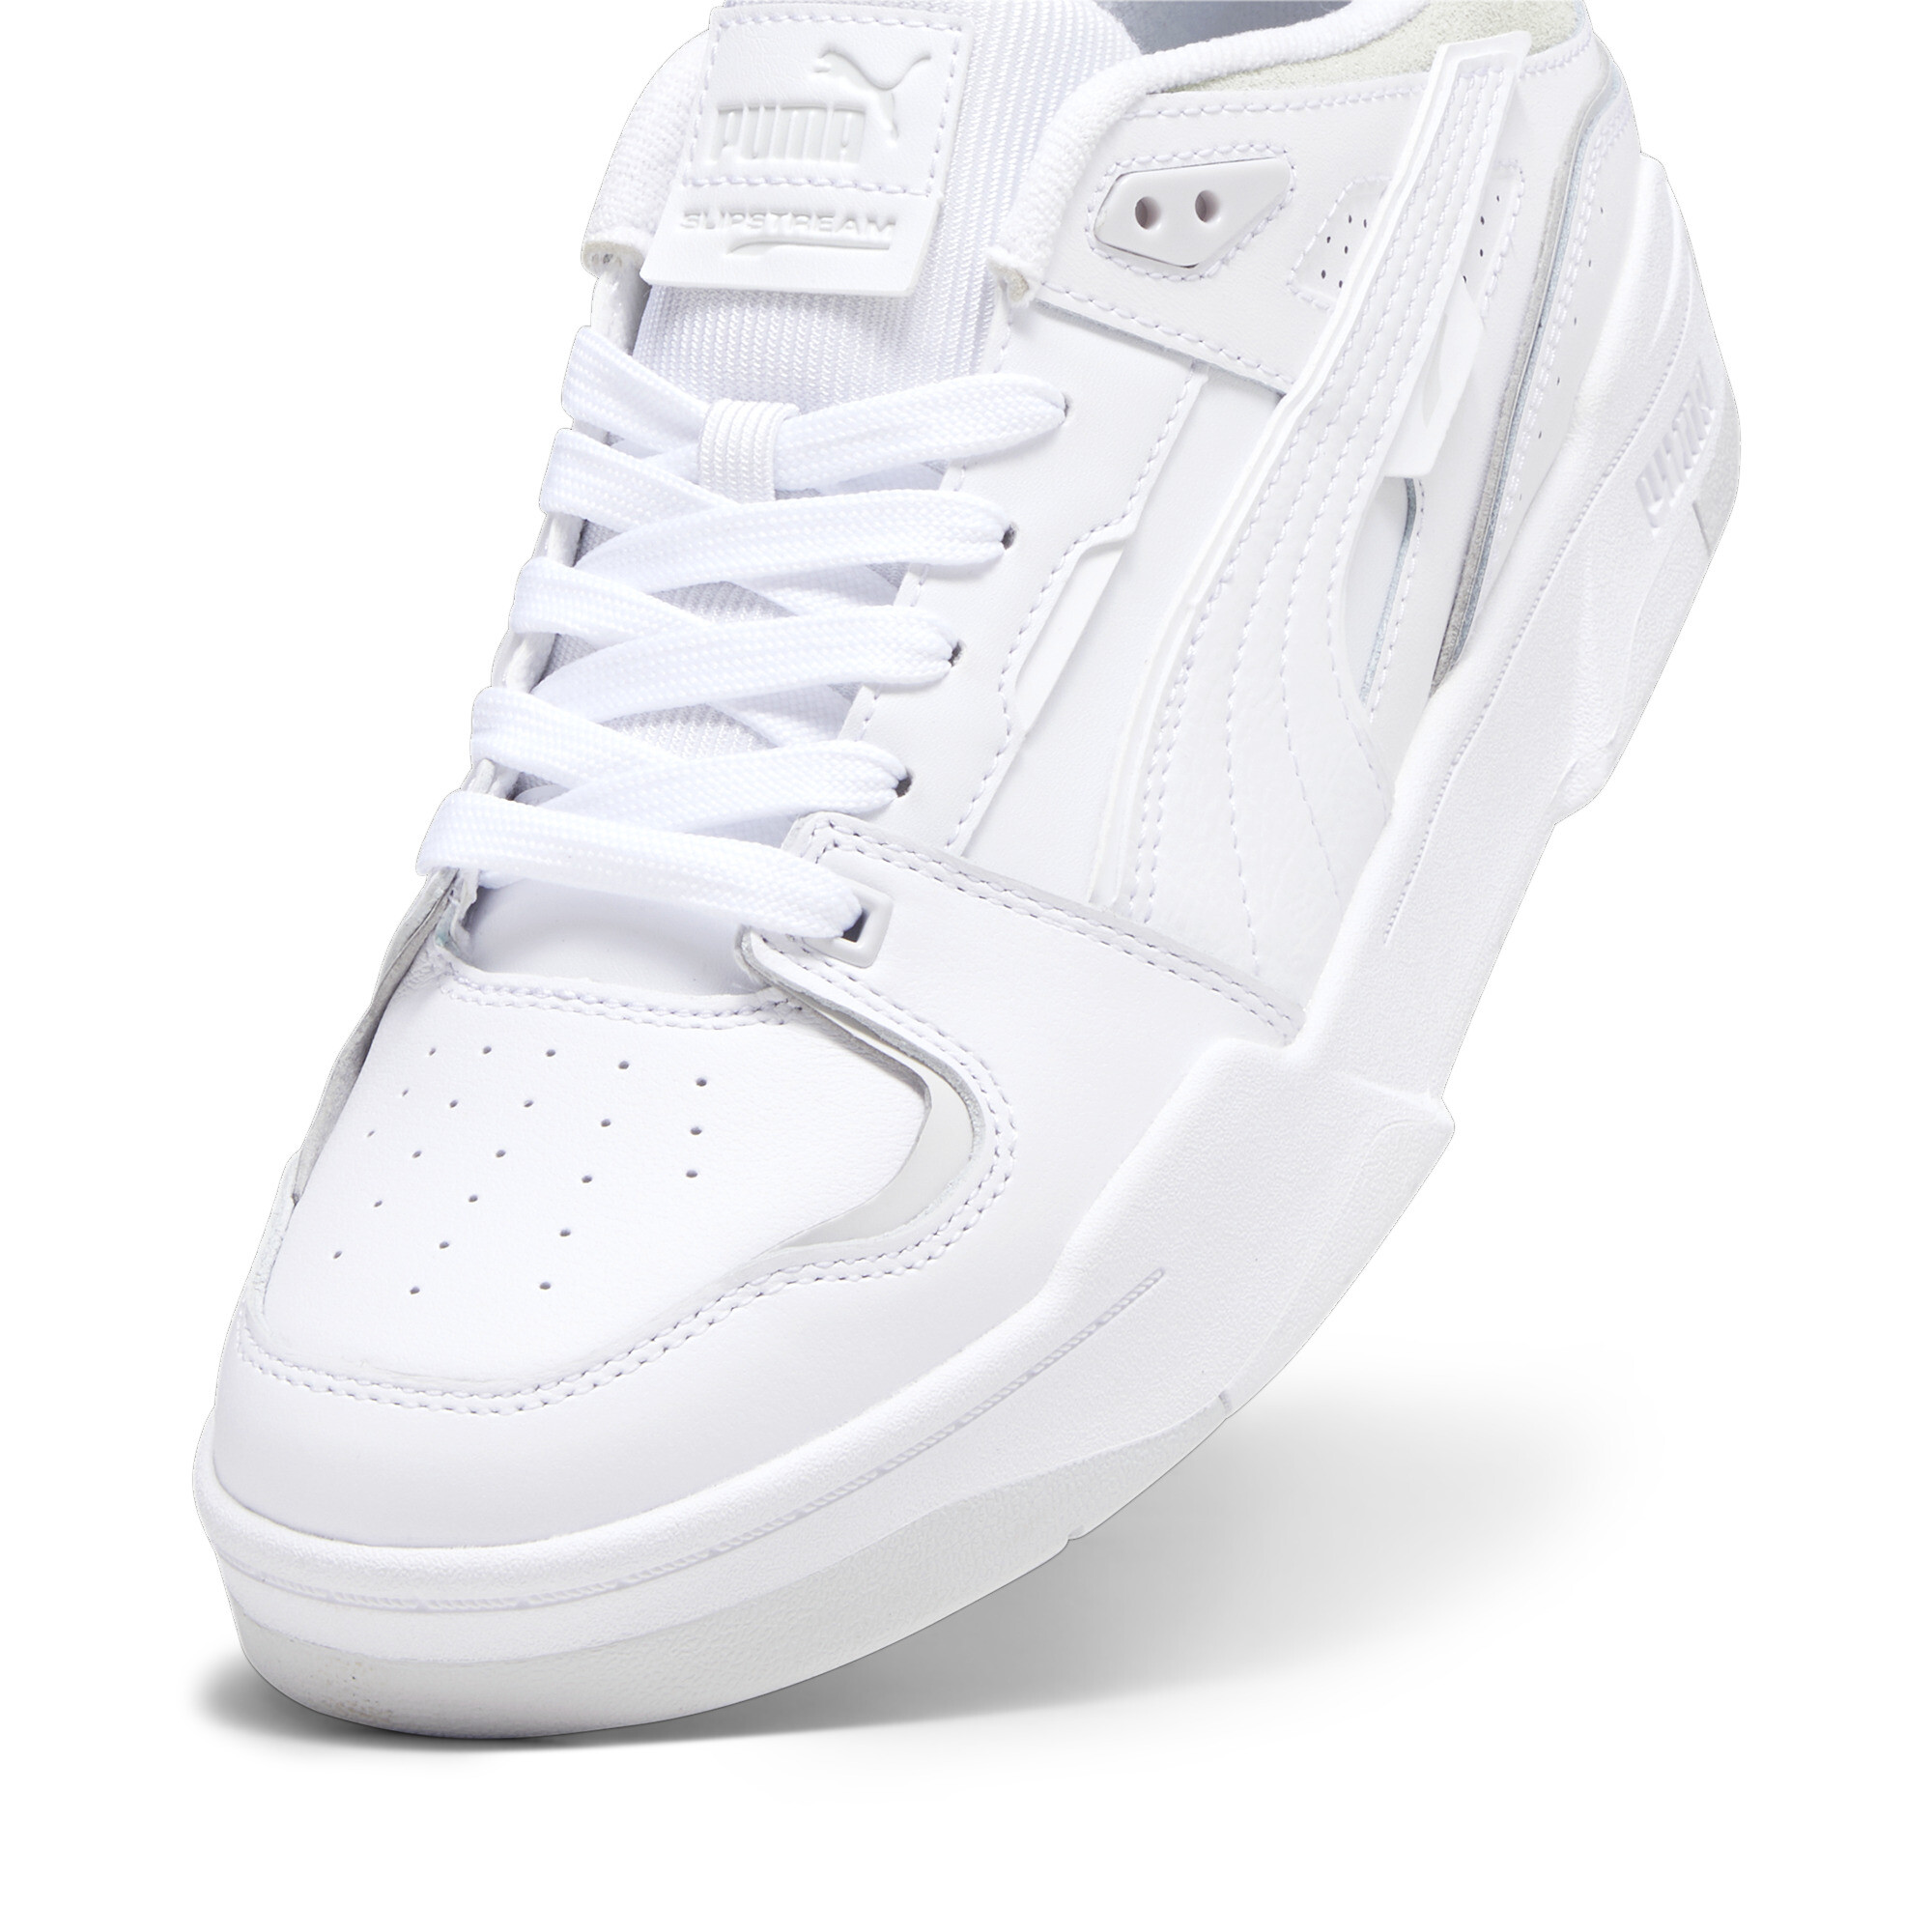 Men's PUMA Slipstream Bball Sneakers In White, Size EU 37